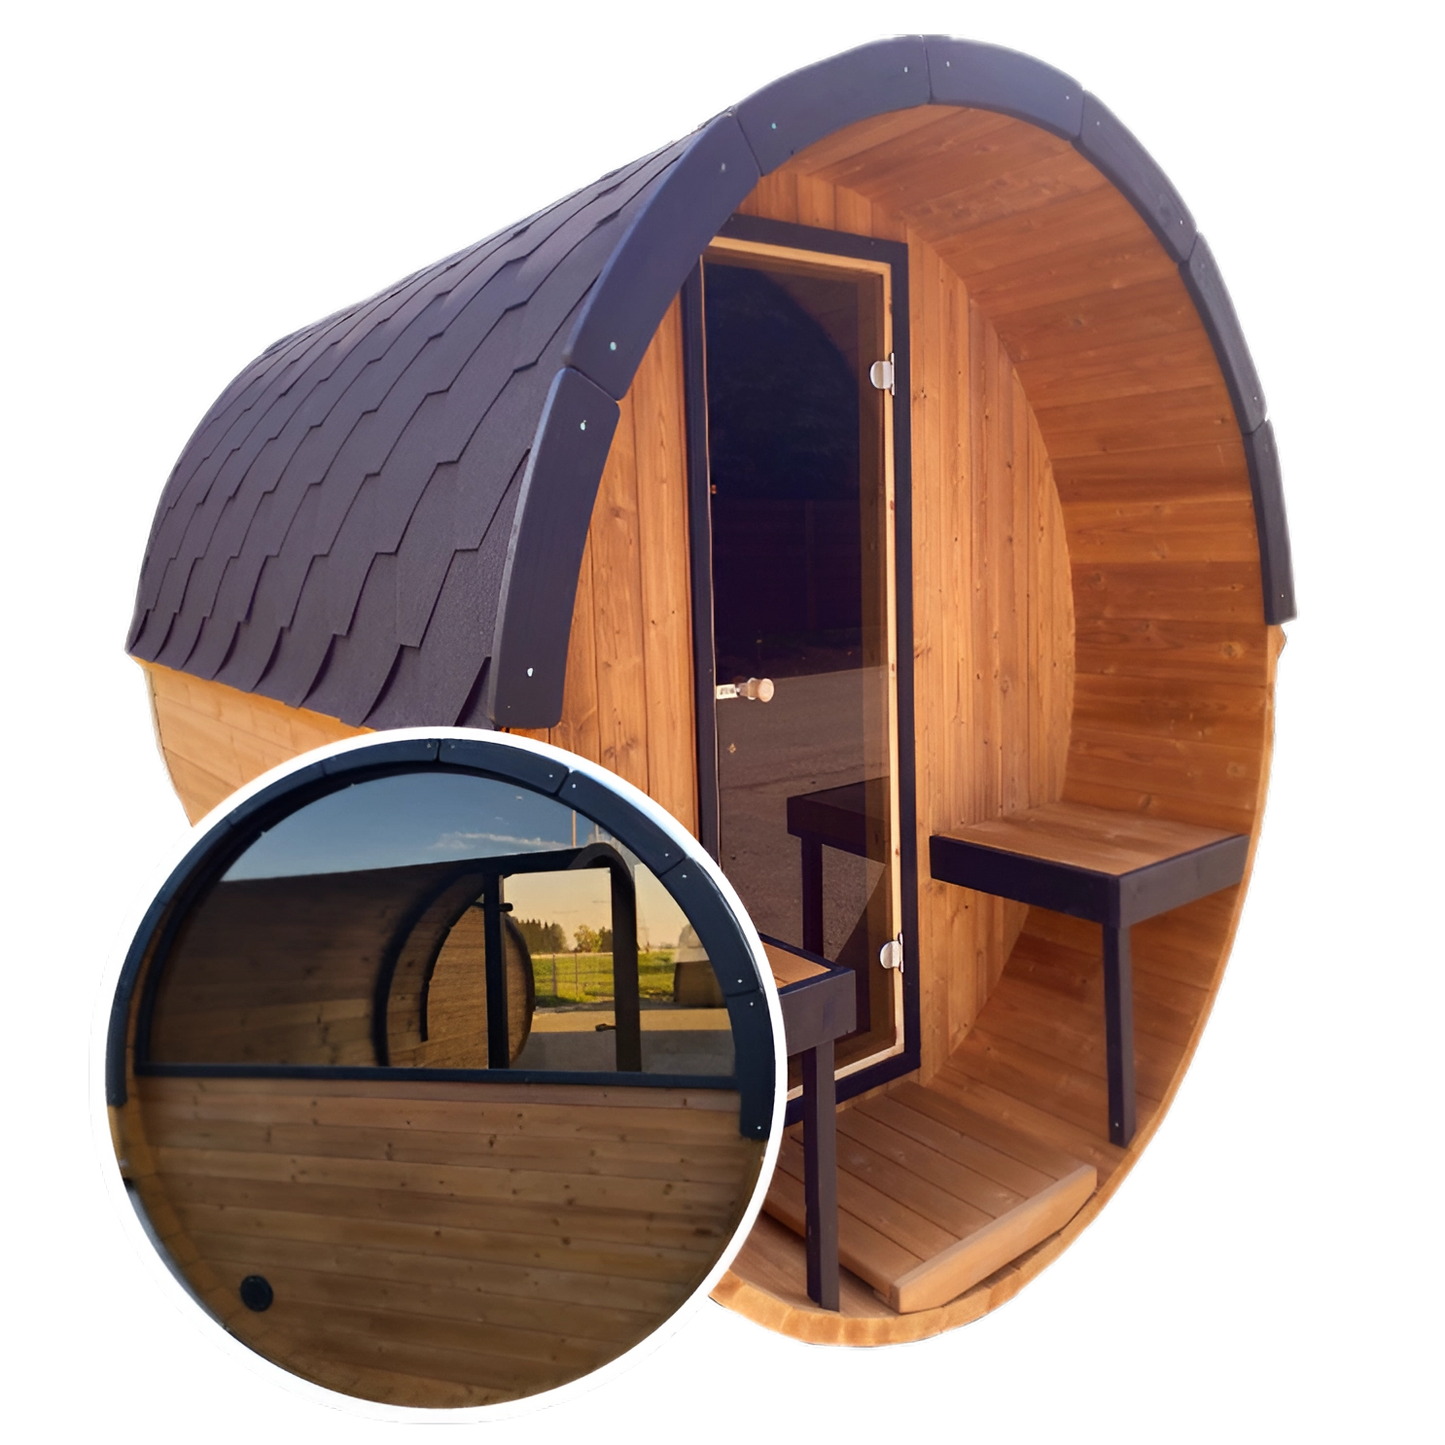 Barrel 3m Outdoor Sauna with Half Rear Panoramic Glass